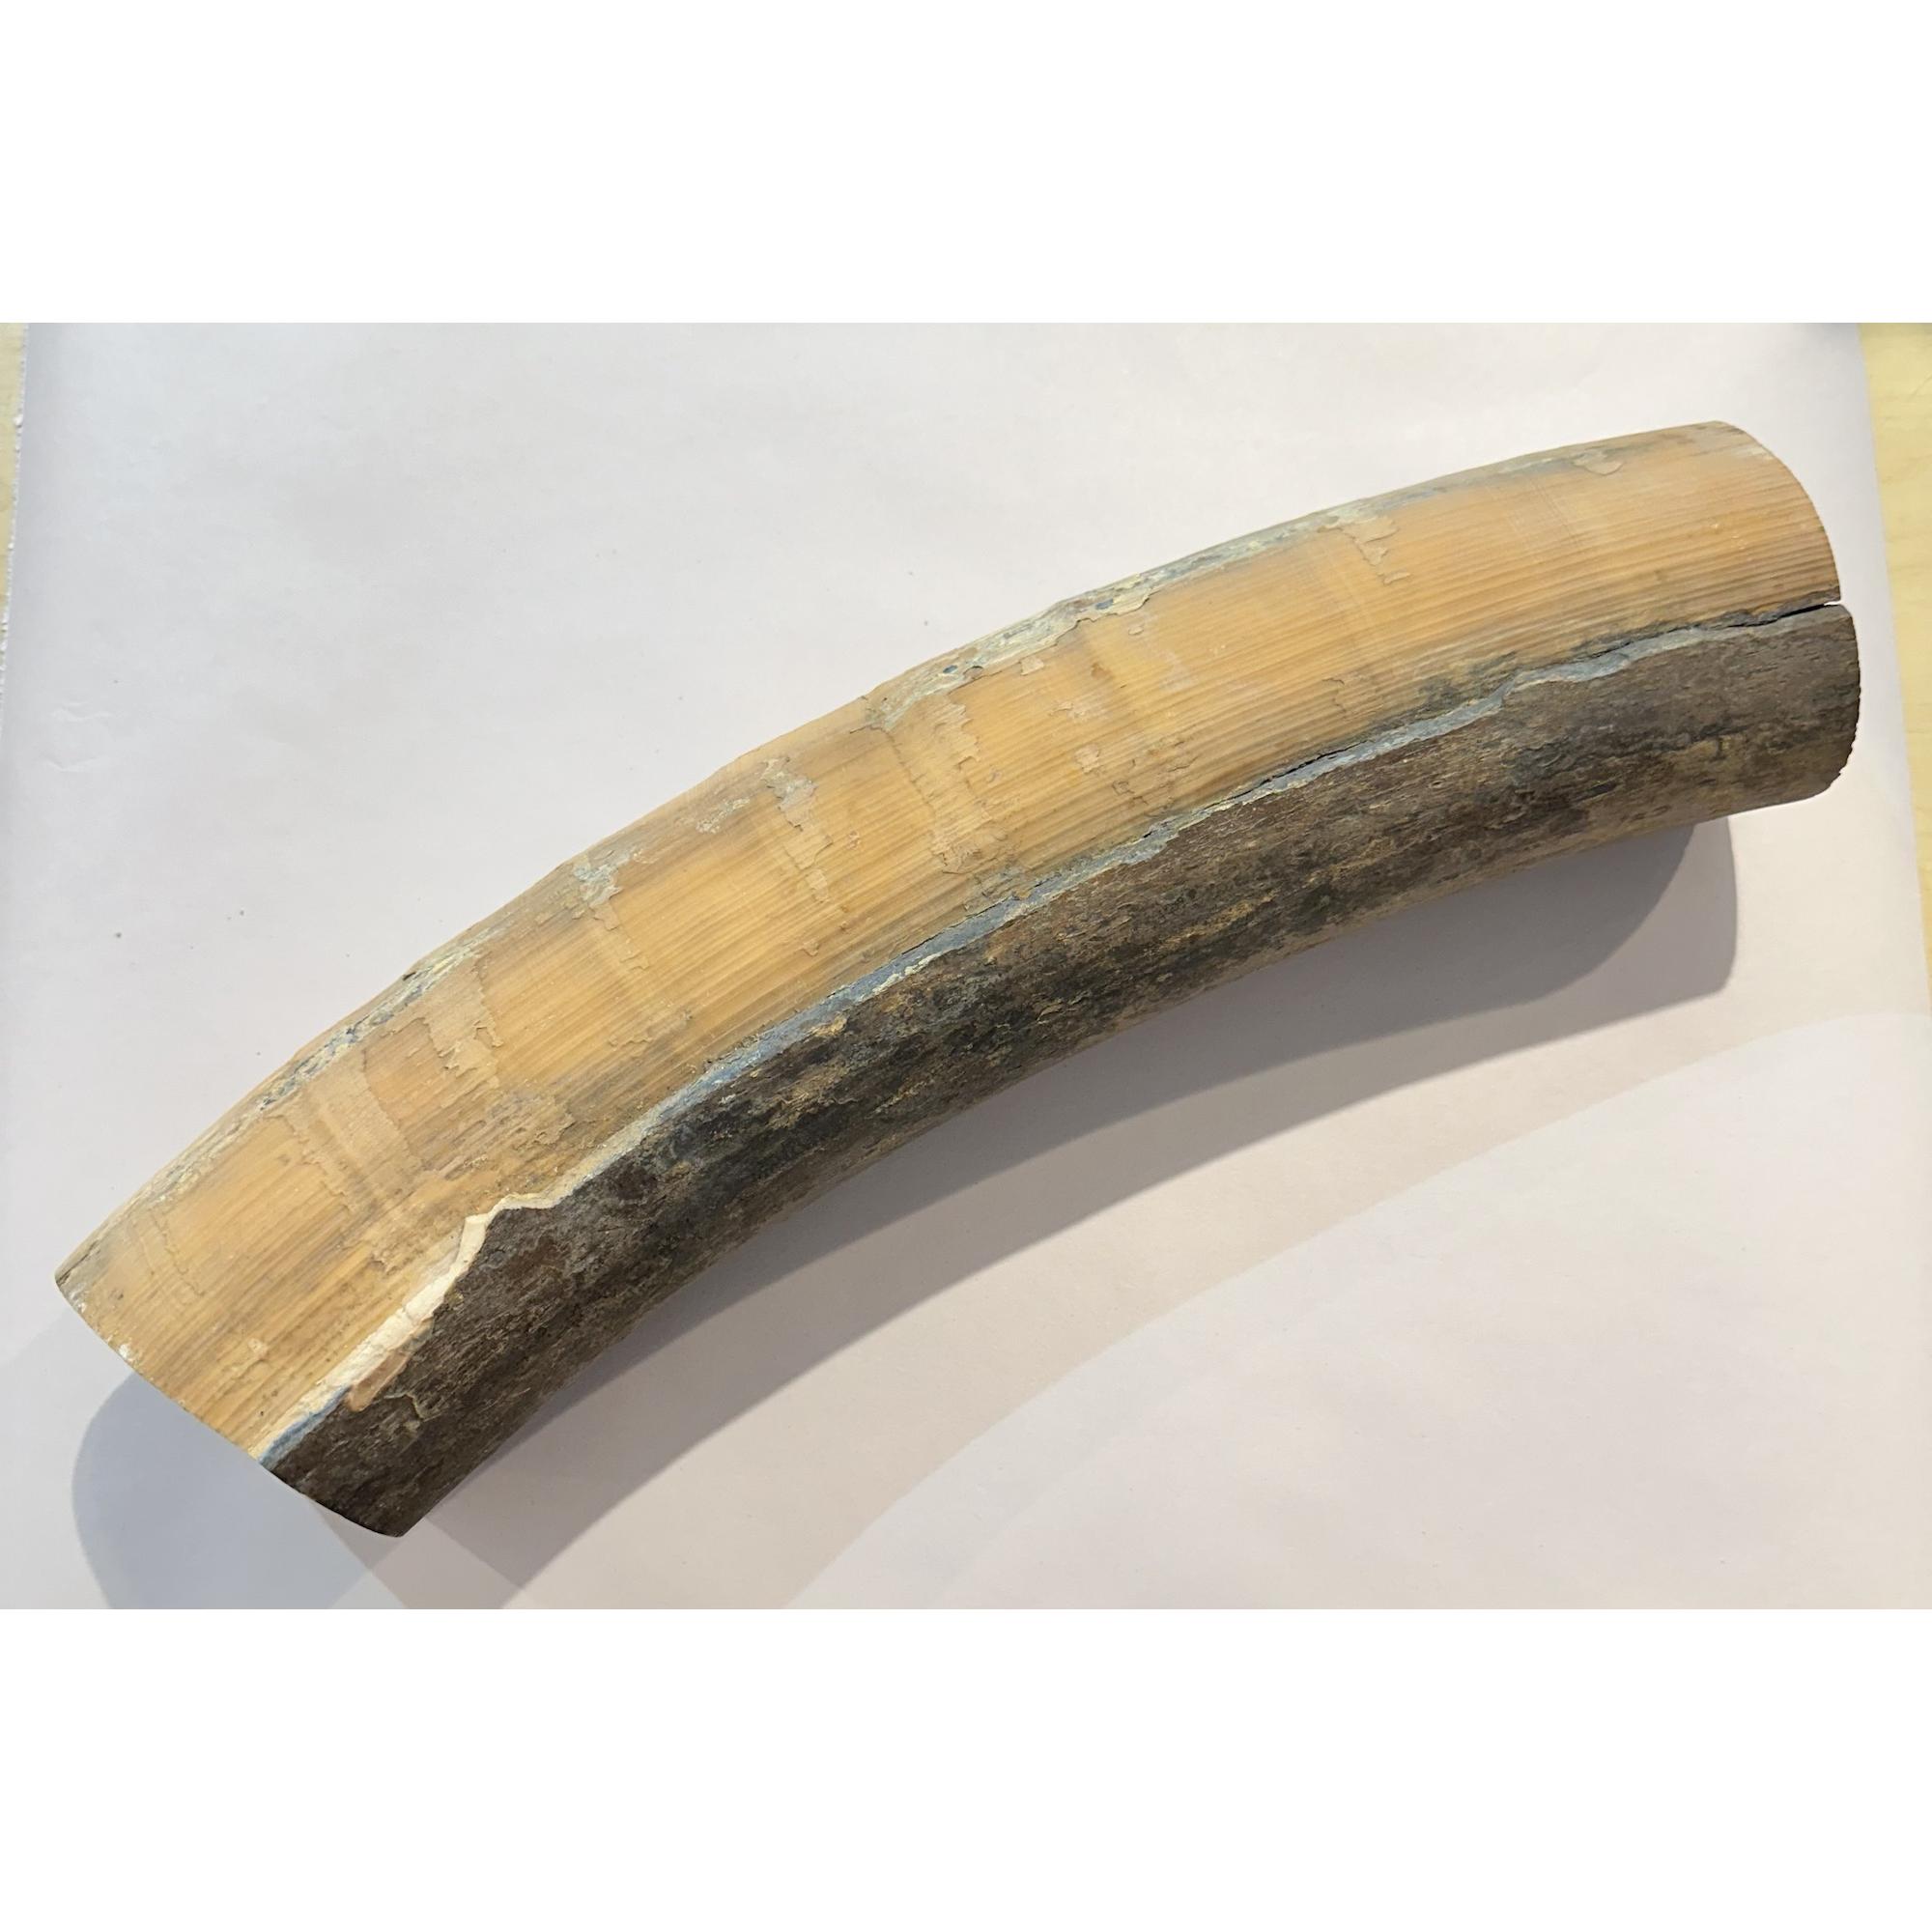 Mammoth Tusk section, rare Washington State Prehistoric Online